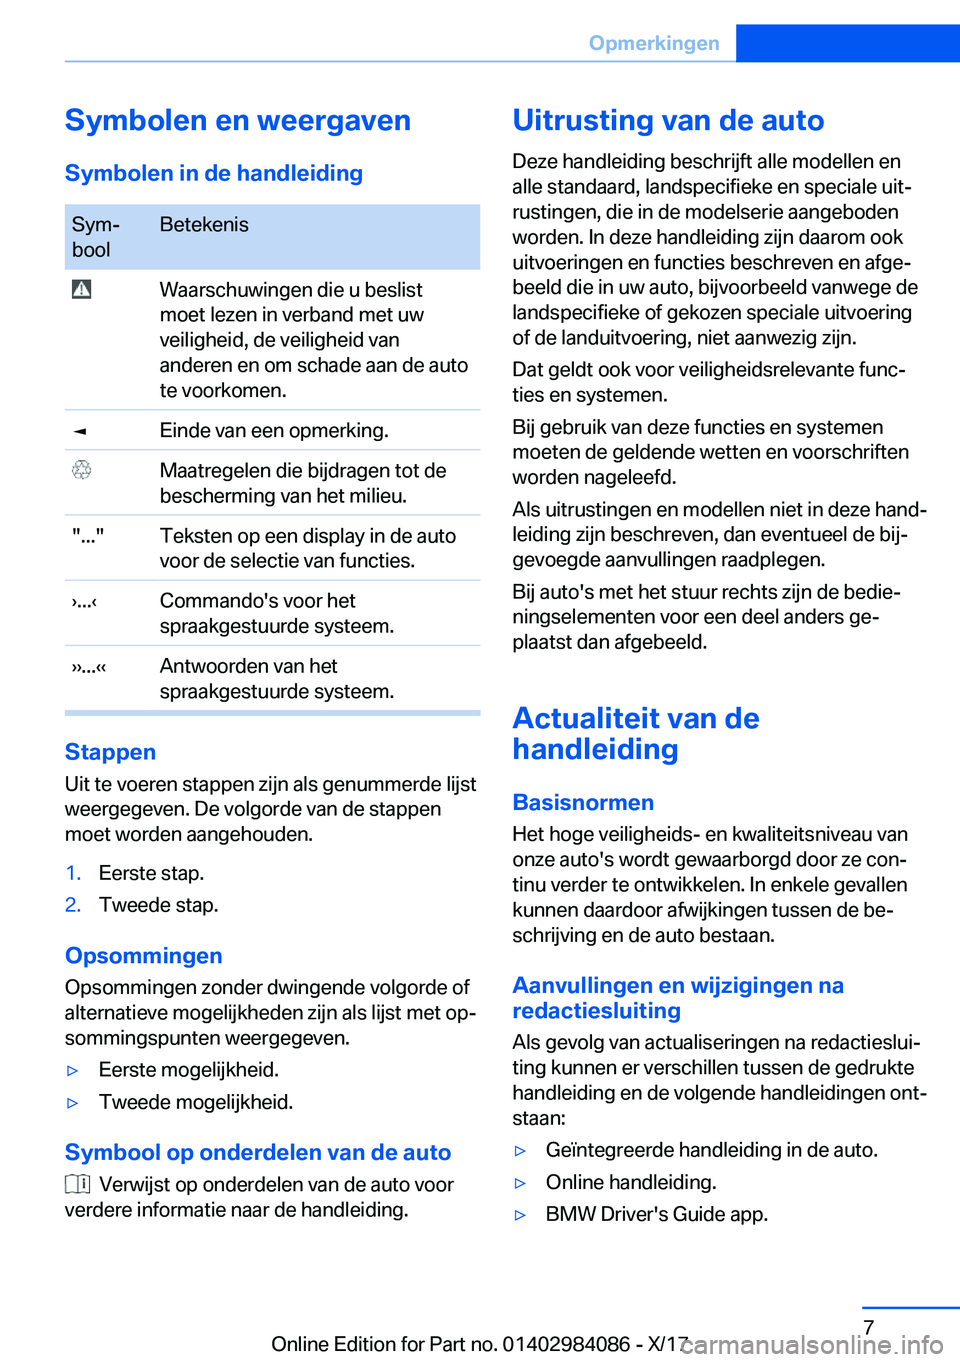 BMW 3 SERIES 2018  Instructieboekjes (in Dutch) �S�y�m�b�o�l�e�n��e�n��w�e�e�r�g�a�v�e�n�S�y�m�b�o�l�e�n��i�n��d�e��h�a�n�d�l�e�i�d�i�n�g�S�y�mj
�b�o�o�l�B�e�t�e�k�e�n�i�s� �W�a�a�r�s�c�h�u�w�i�n�g�e�n� �d�i�e� �u� �b�e�s�l�i�s�t
�m�o�e�t� �l